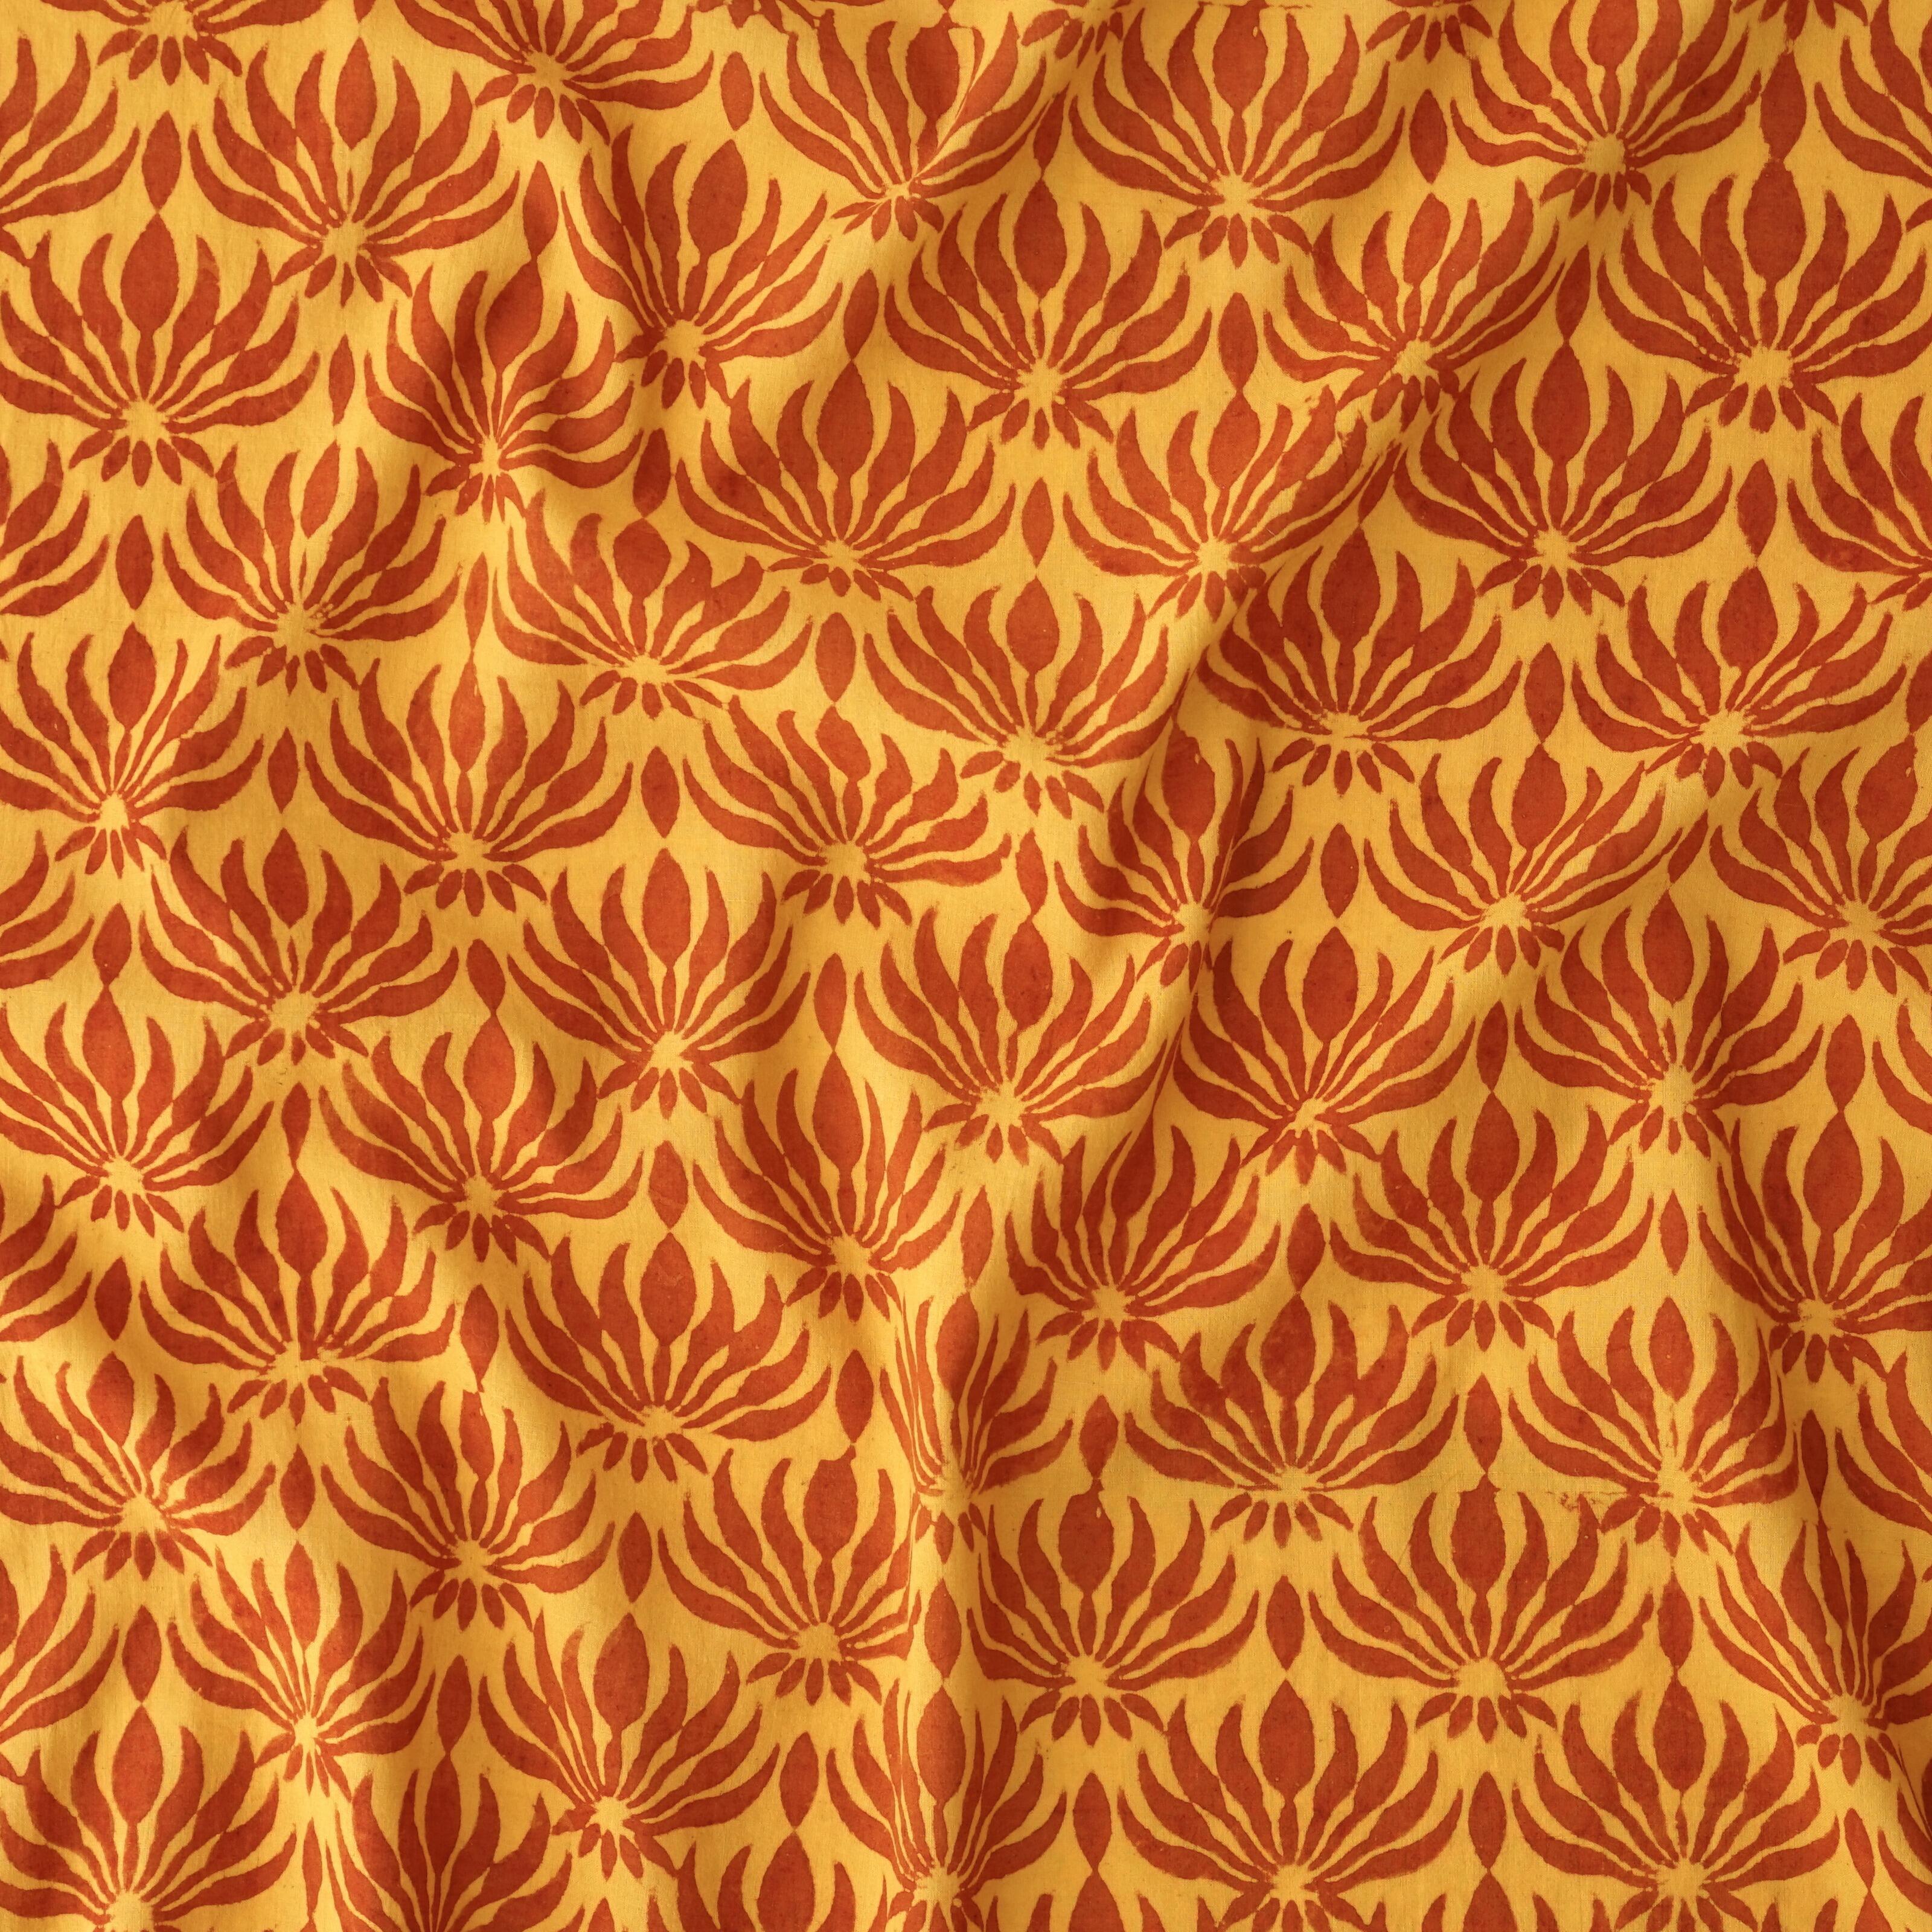 2 - AHM01 - 100% Block-Printed Cotton Fabric from India - Ajrak - Alizarin Maroon Lotus Flower, Turmeric Yellow Spray Print - Contrast